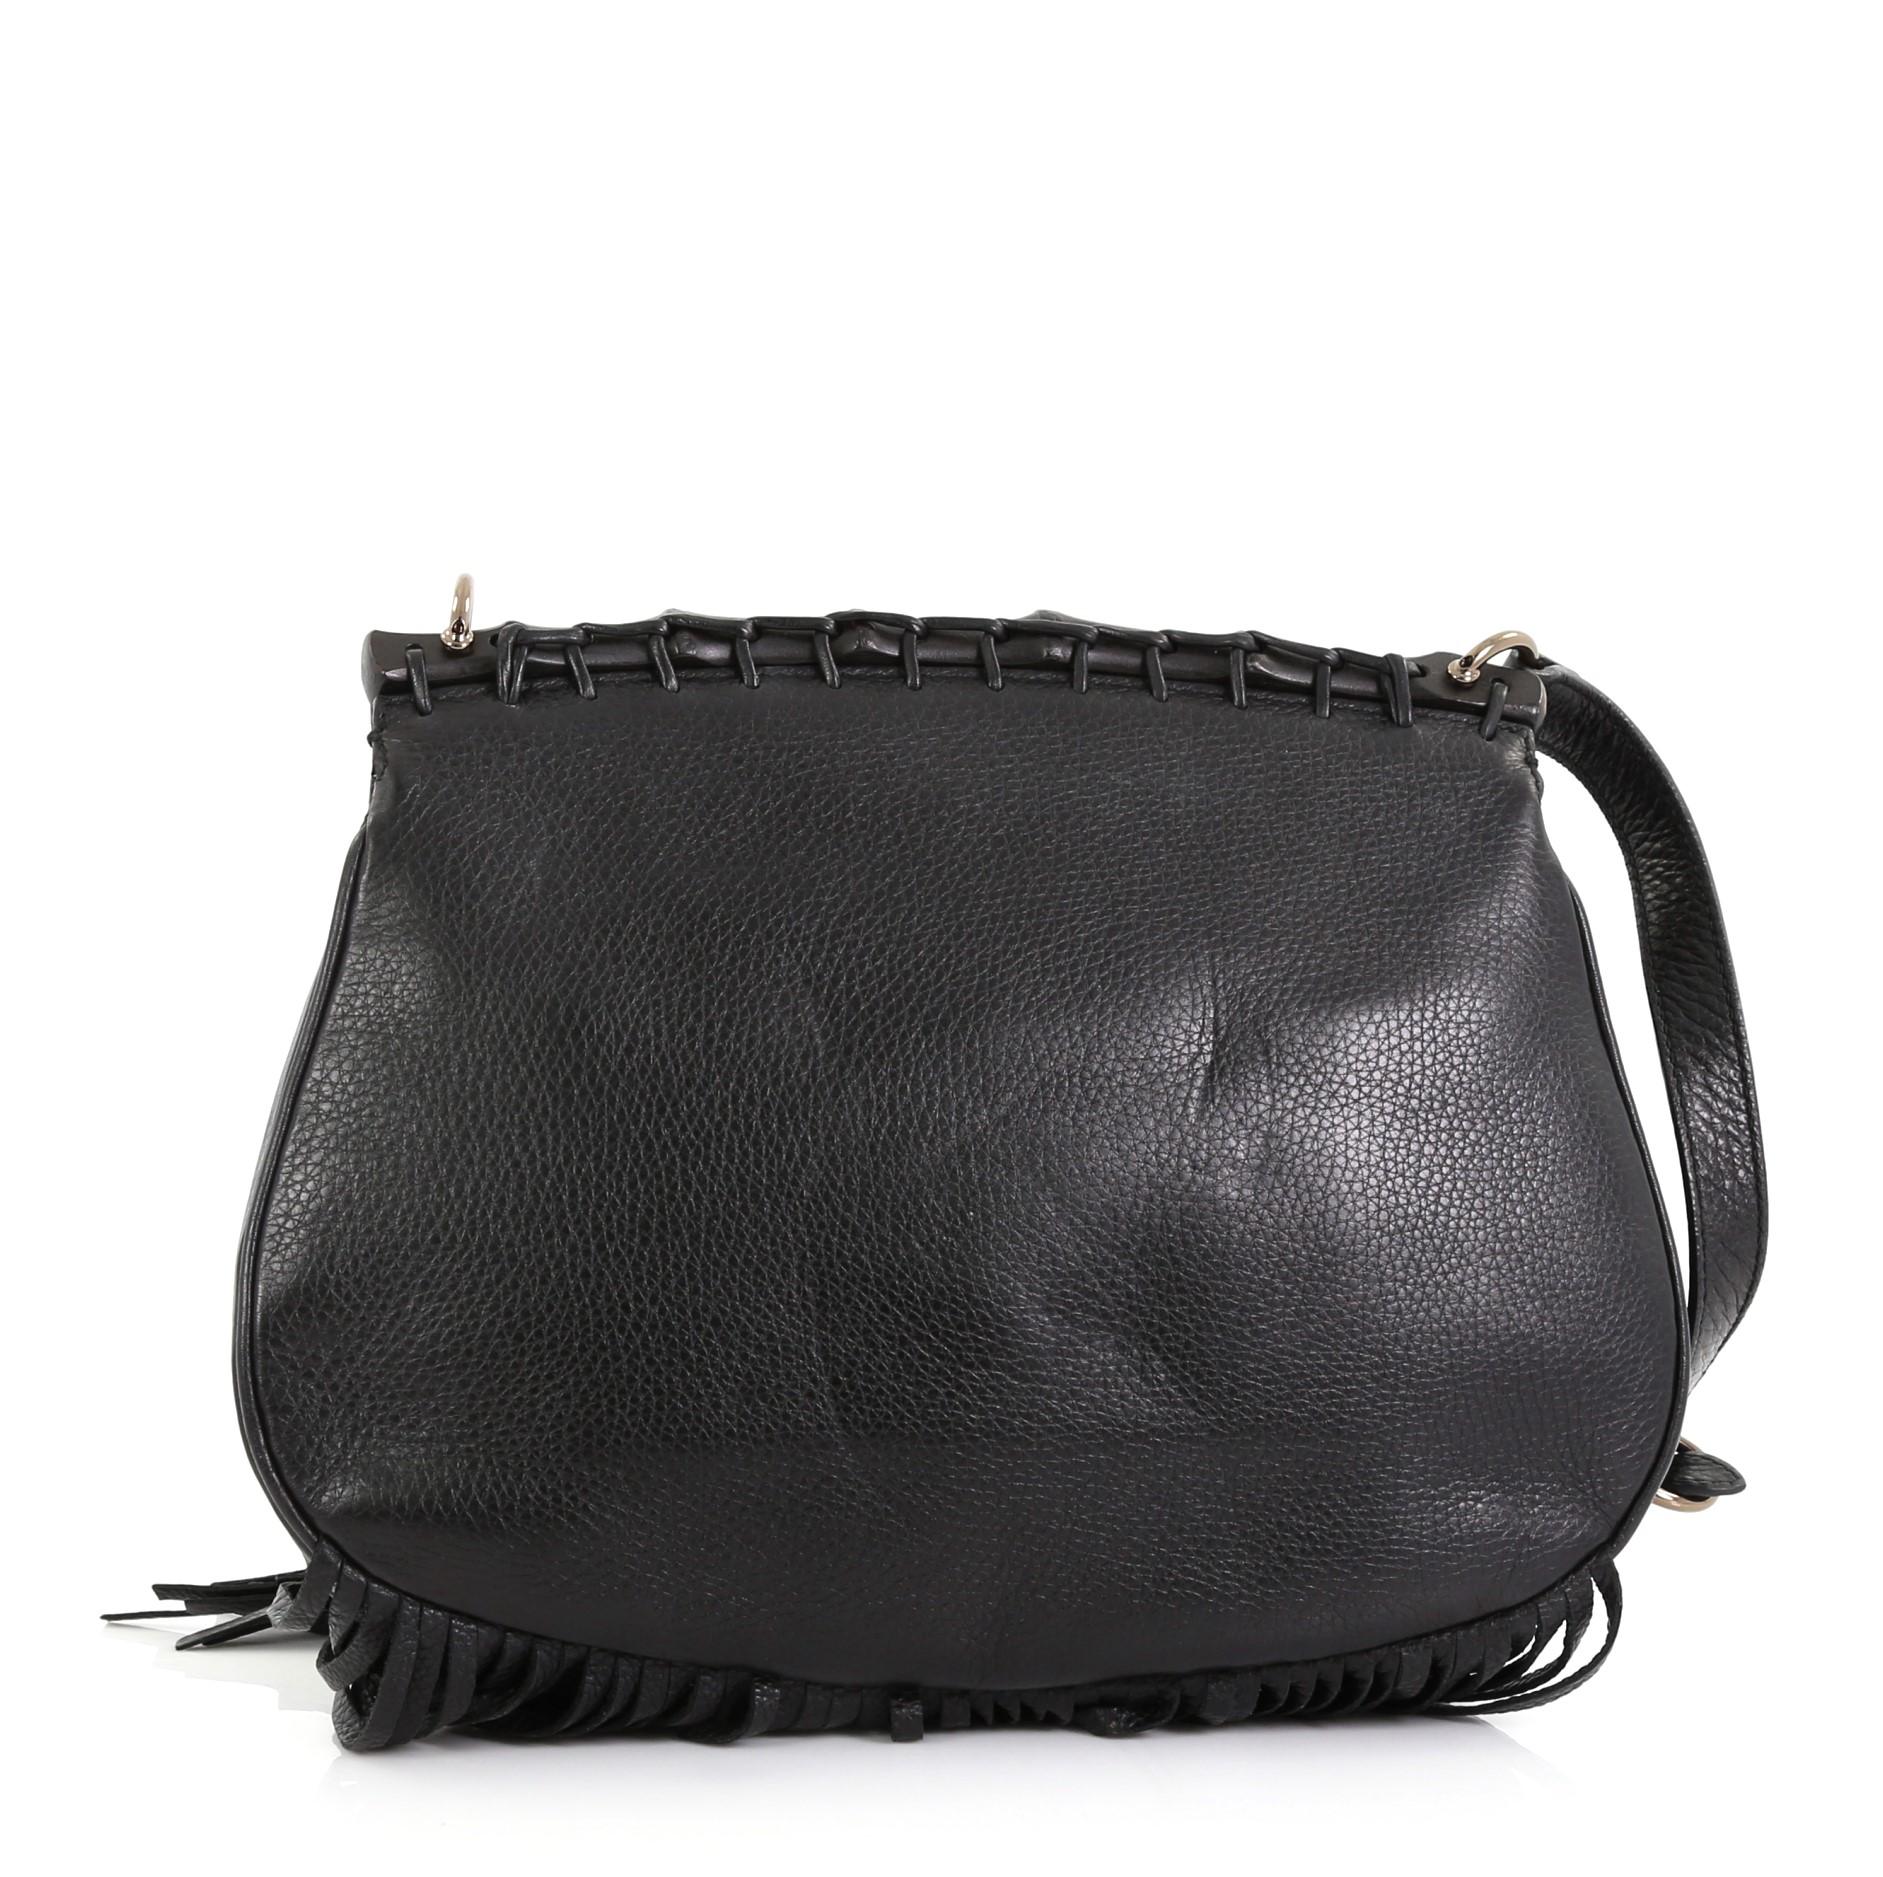 Black Gucci Nouveau Fringe Crossbody Bag Leather Medium